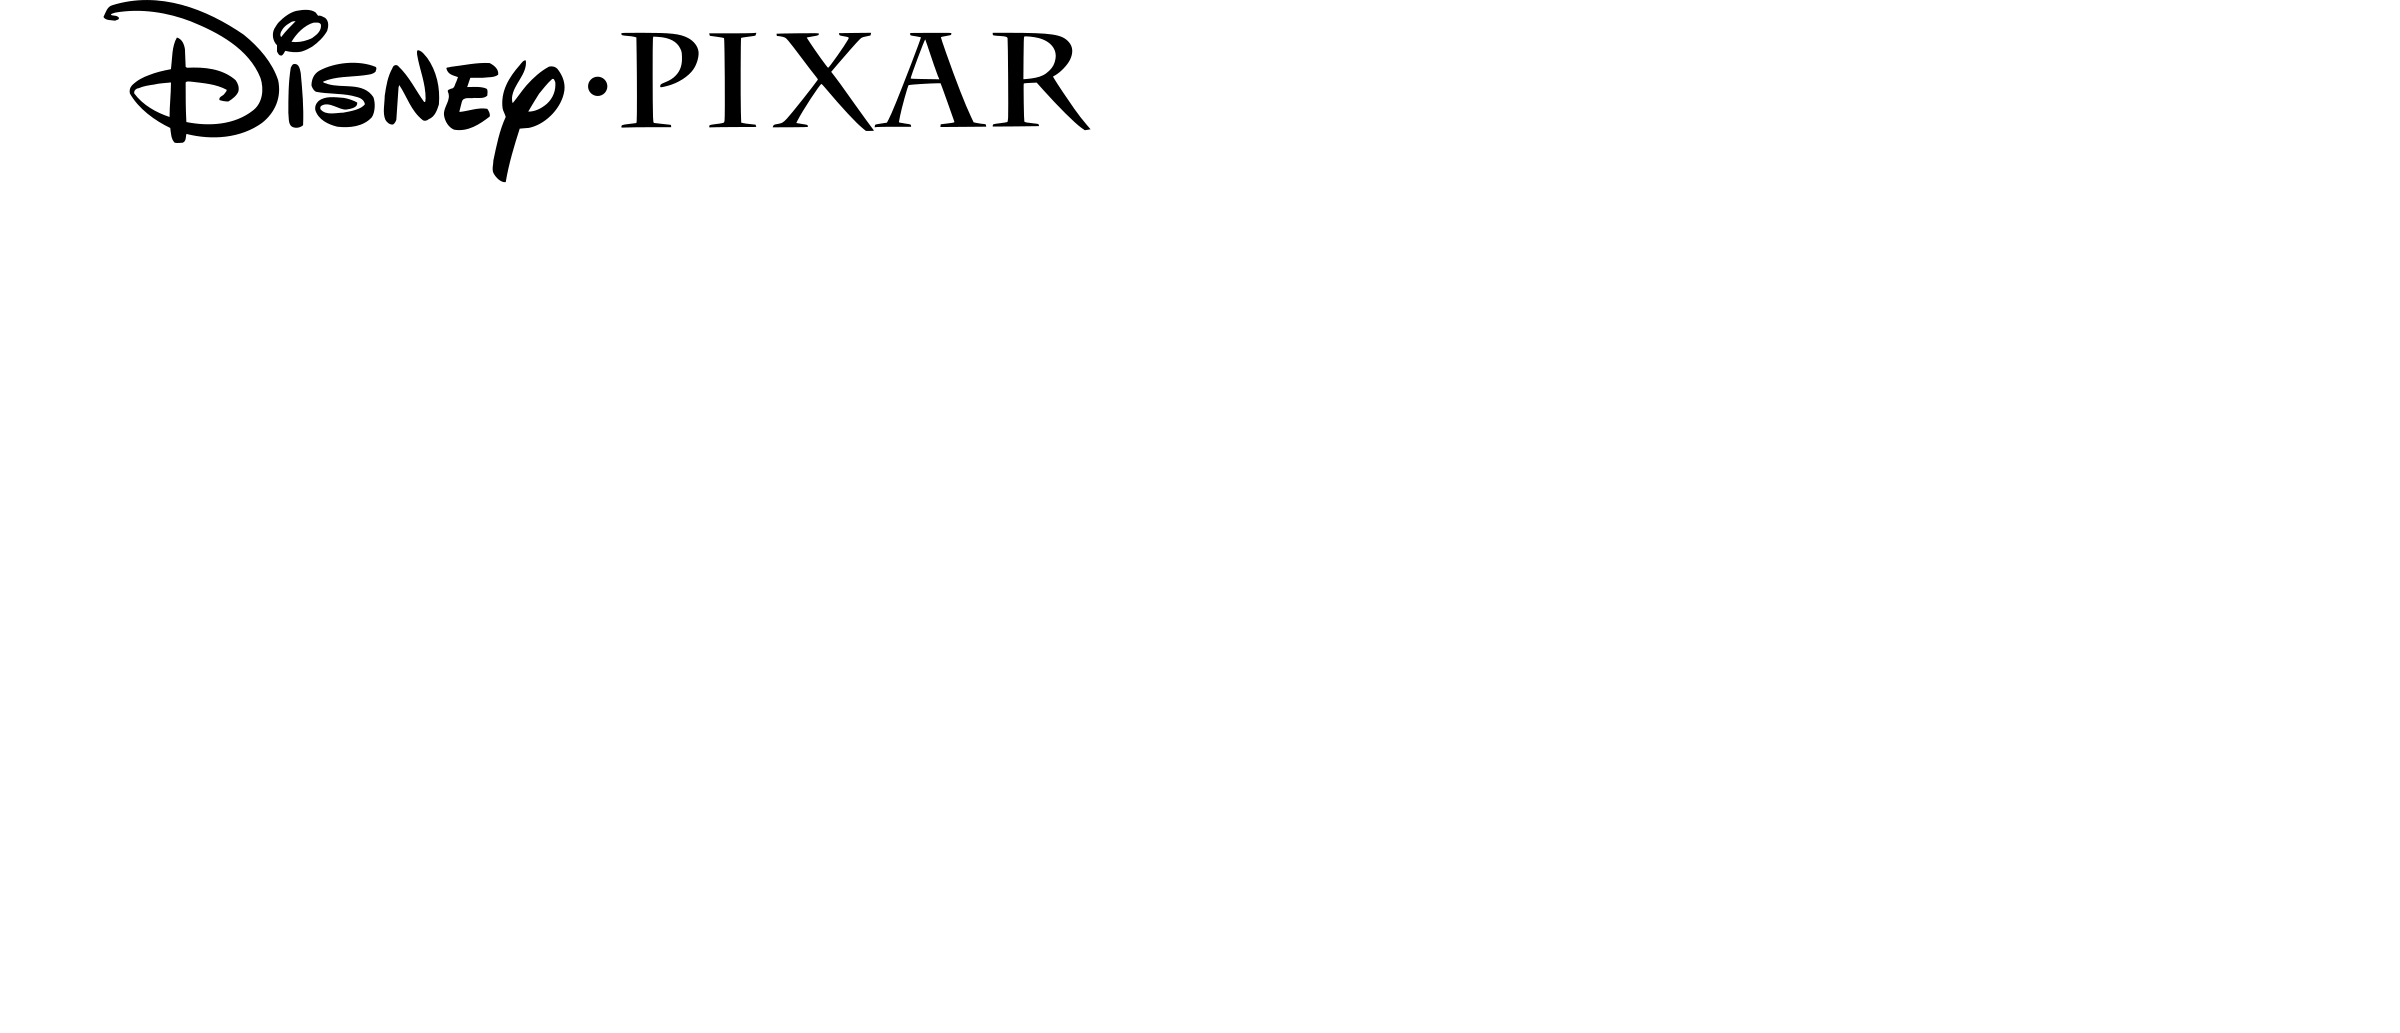 Disney Pixar Finding Nemo Logo - Finding Nemo Logo PNG Transparent & SVG Vector - Freebie Supply